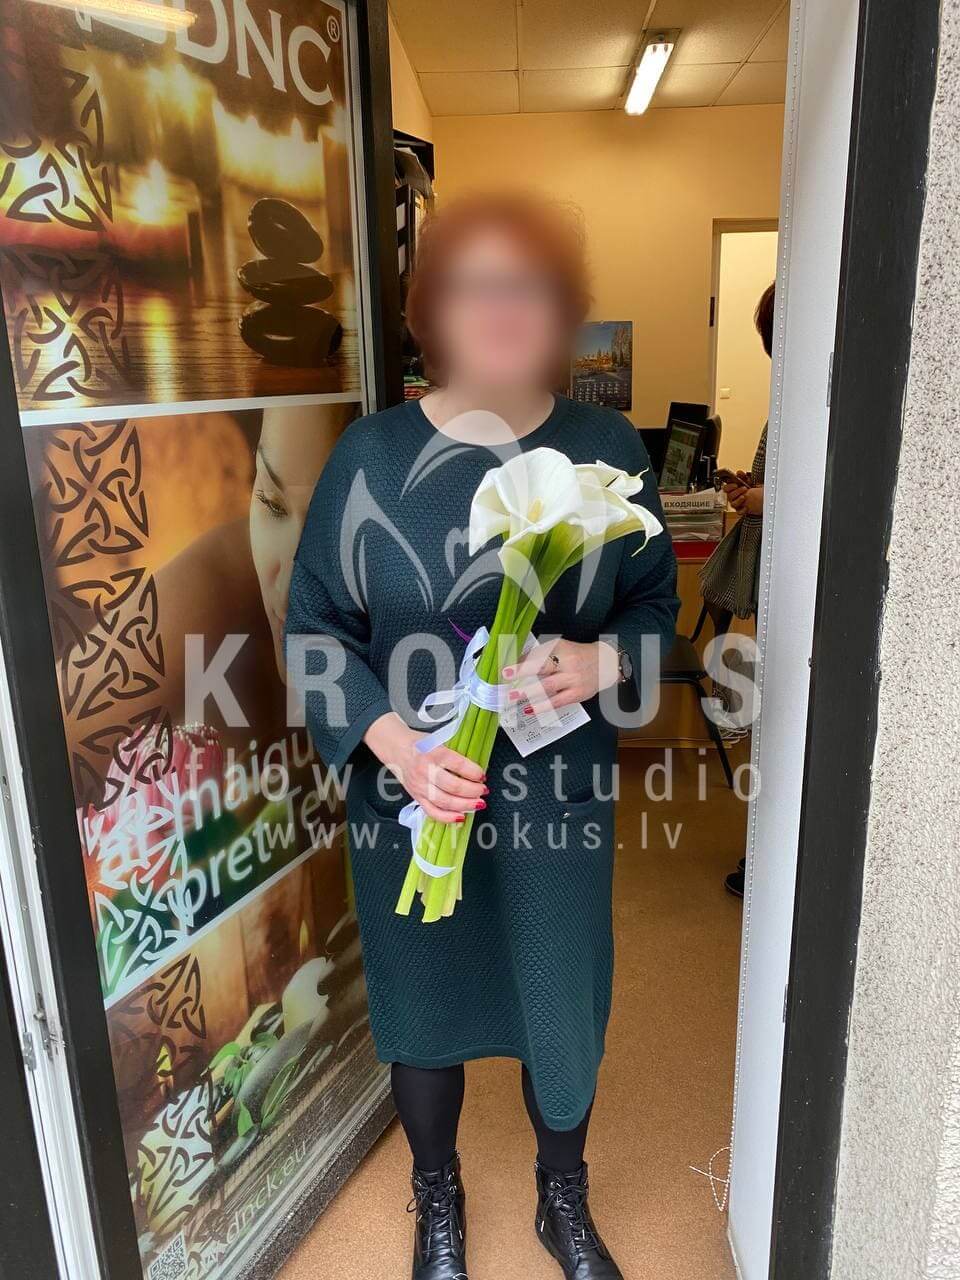 Deliver flowers to Rīga (calla lilies)